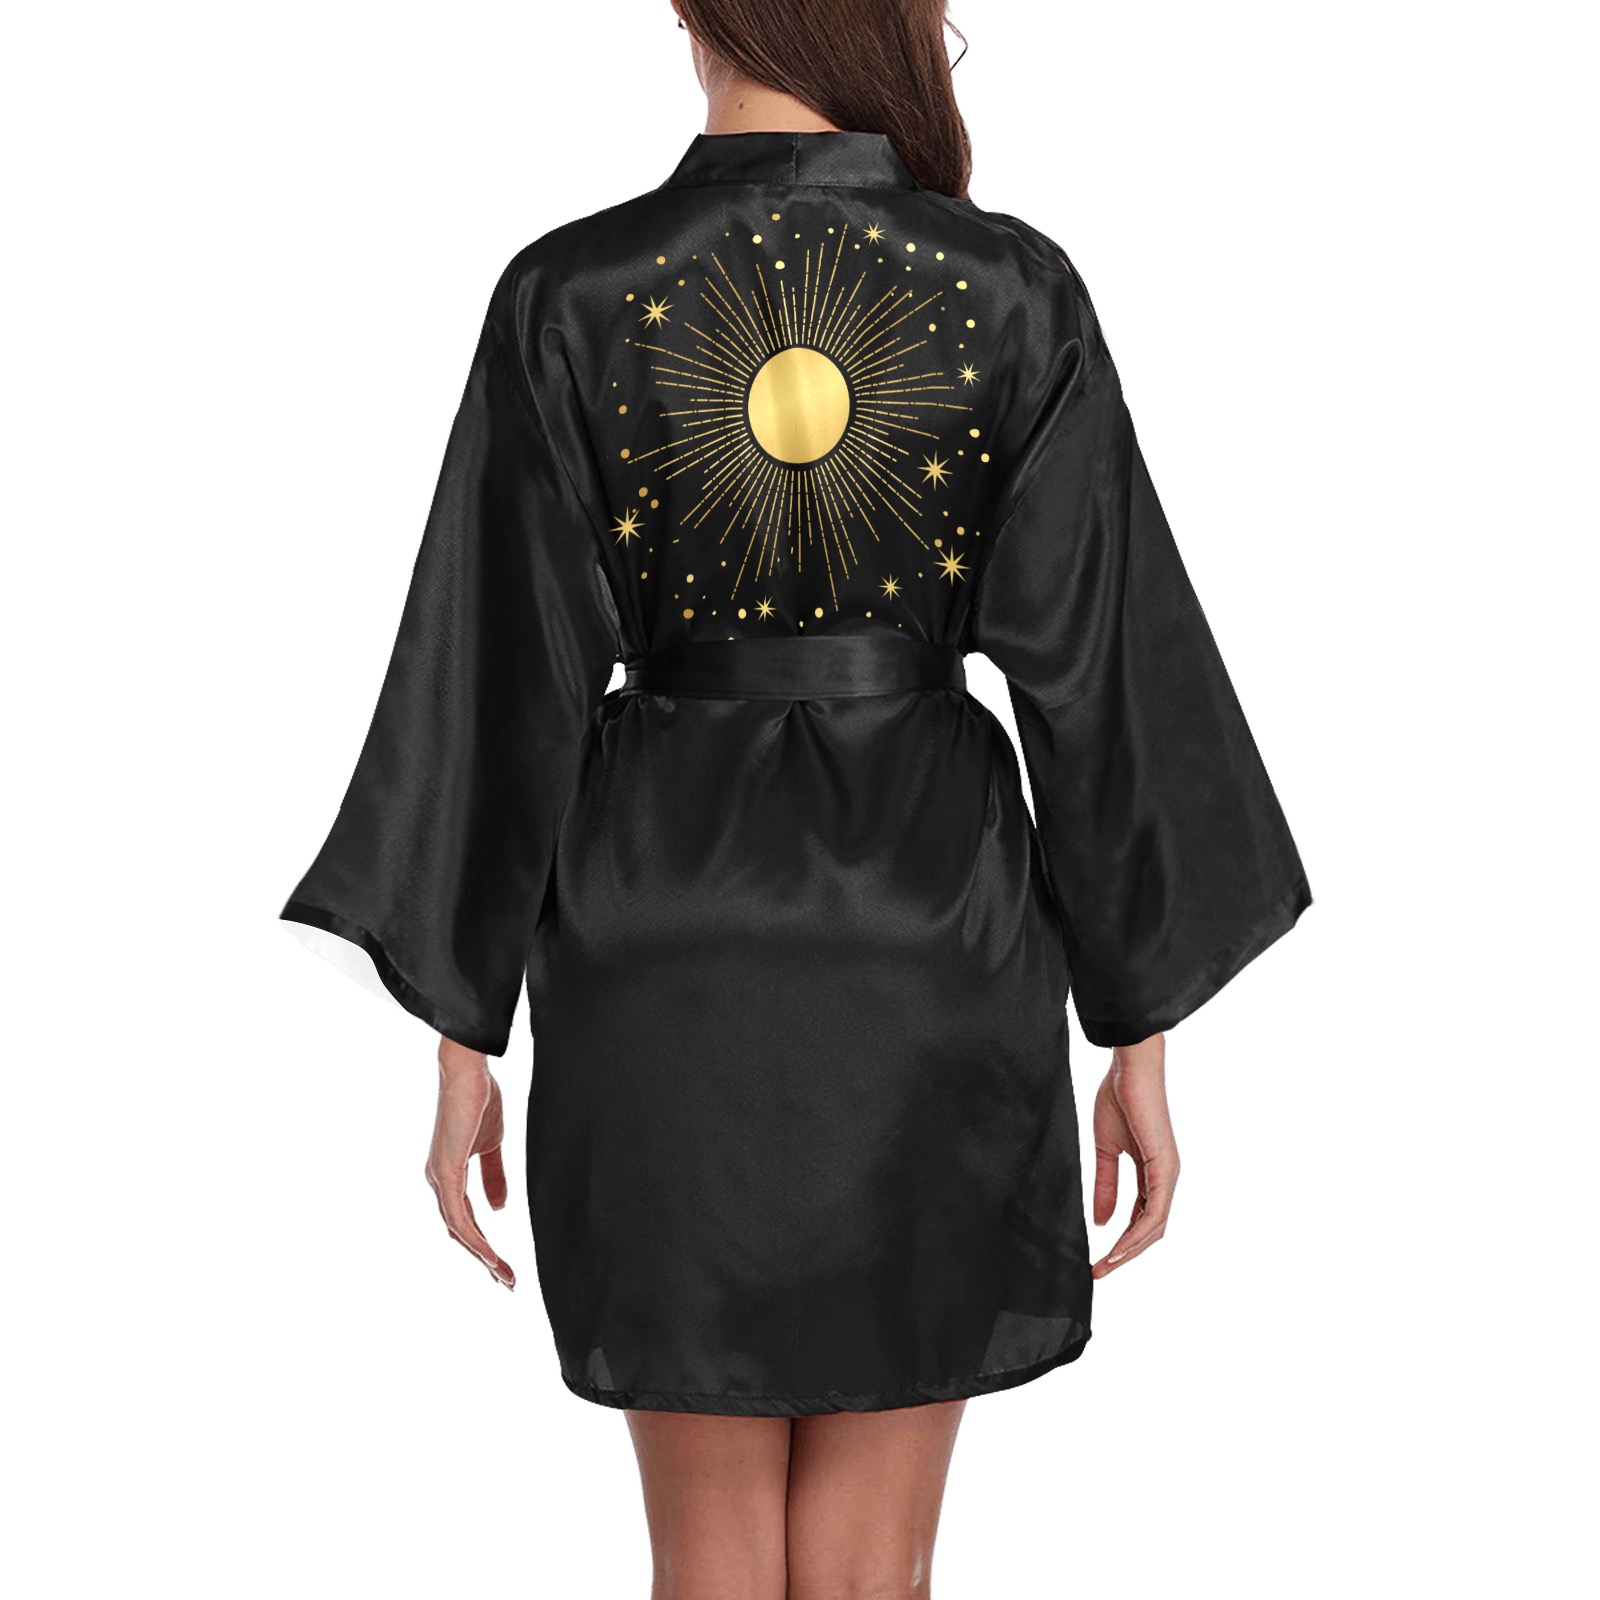 Black Kimono with Golden Sun, Moon and Stars Long Sleeve Kimono Robe